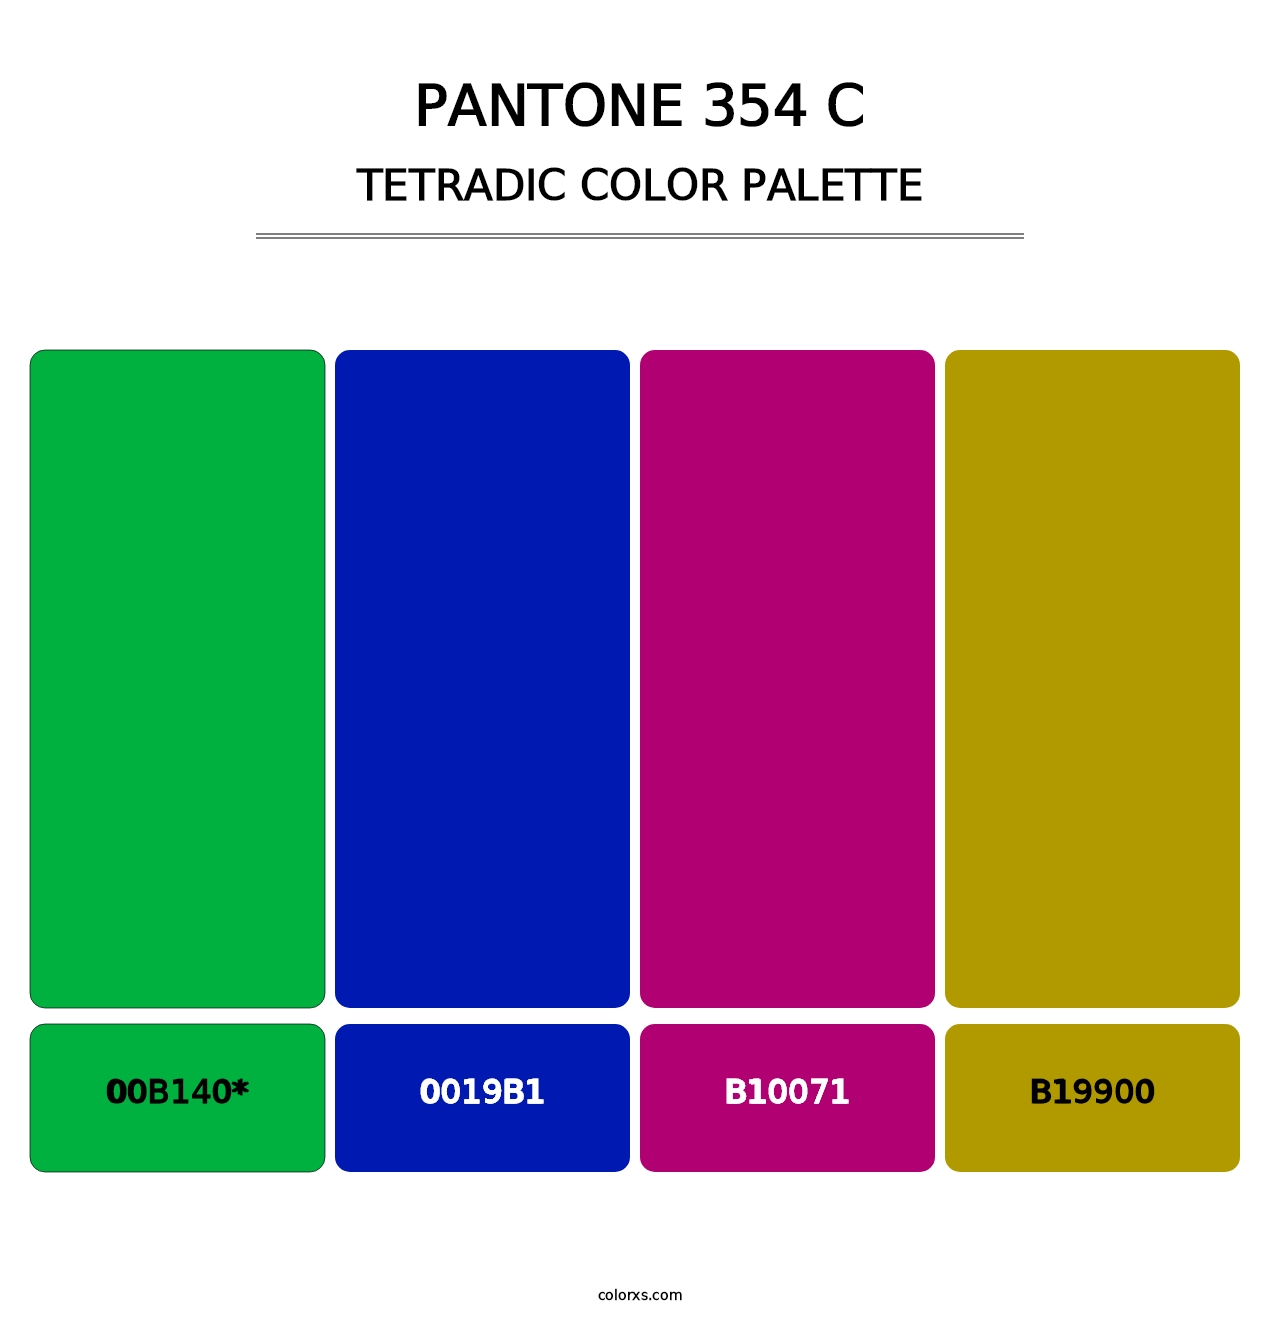 PANTONE 354 C - Tetradic Color Palette